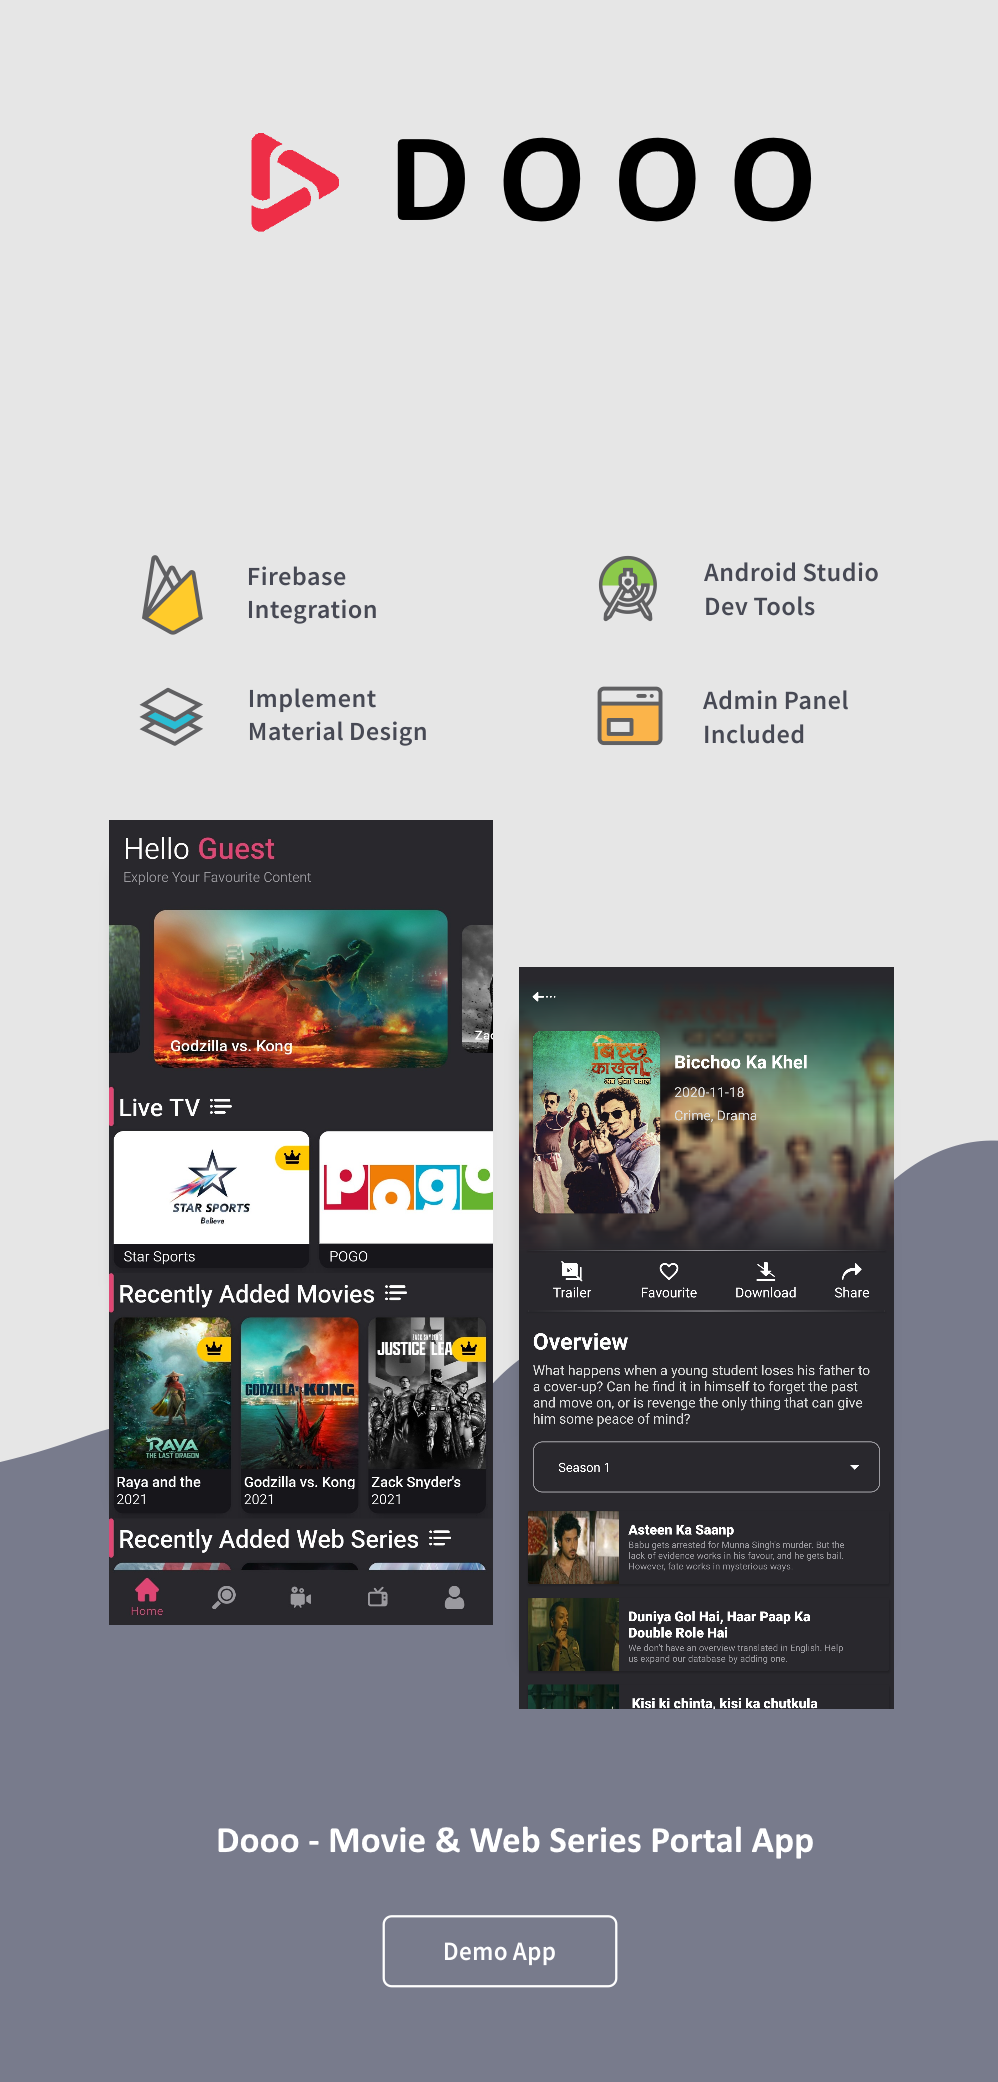 Dooo - Movie & Web Series Portal App User Documentation